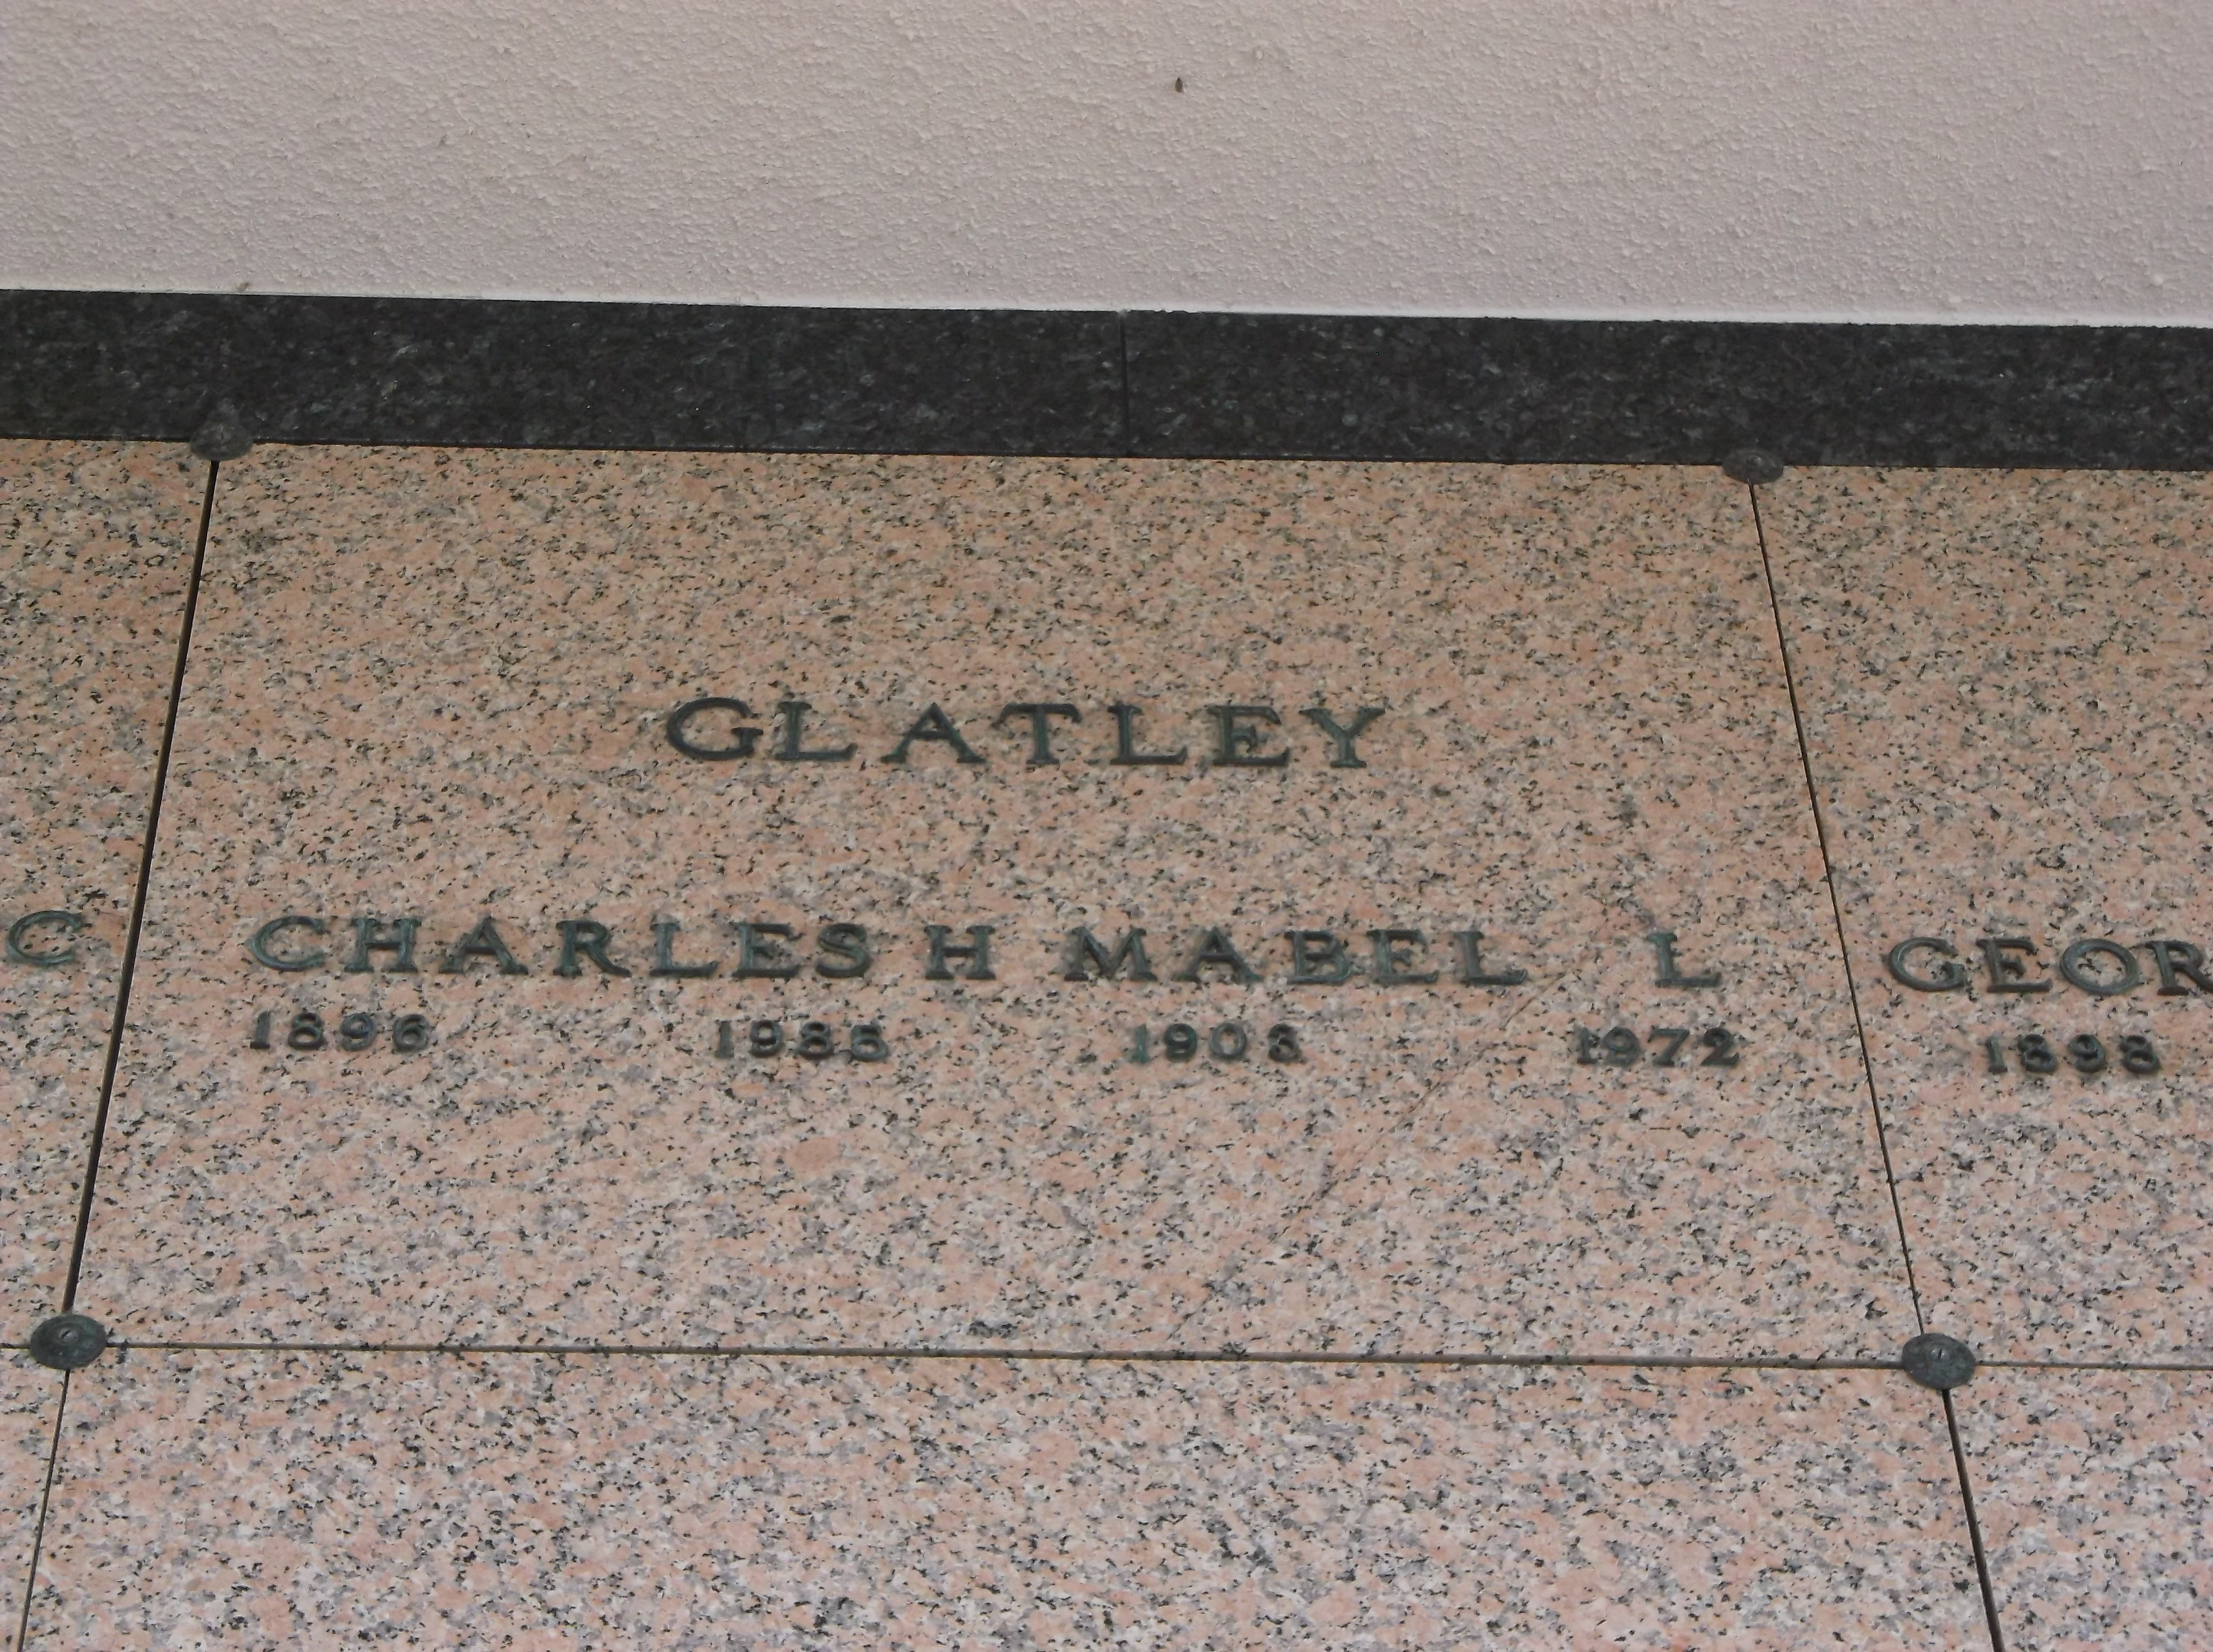 Mabel L Glatley